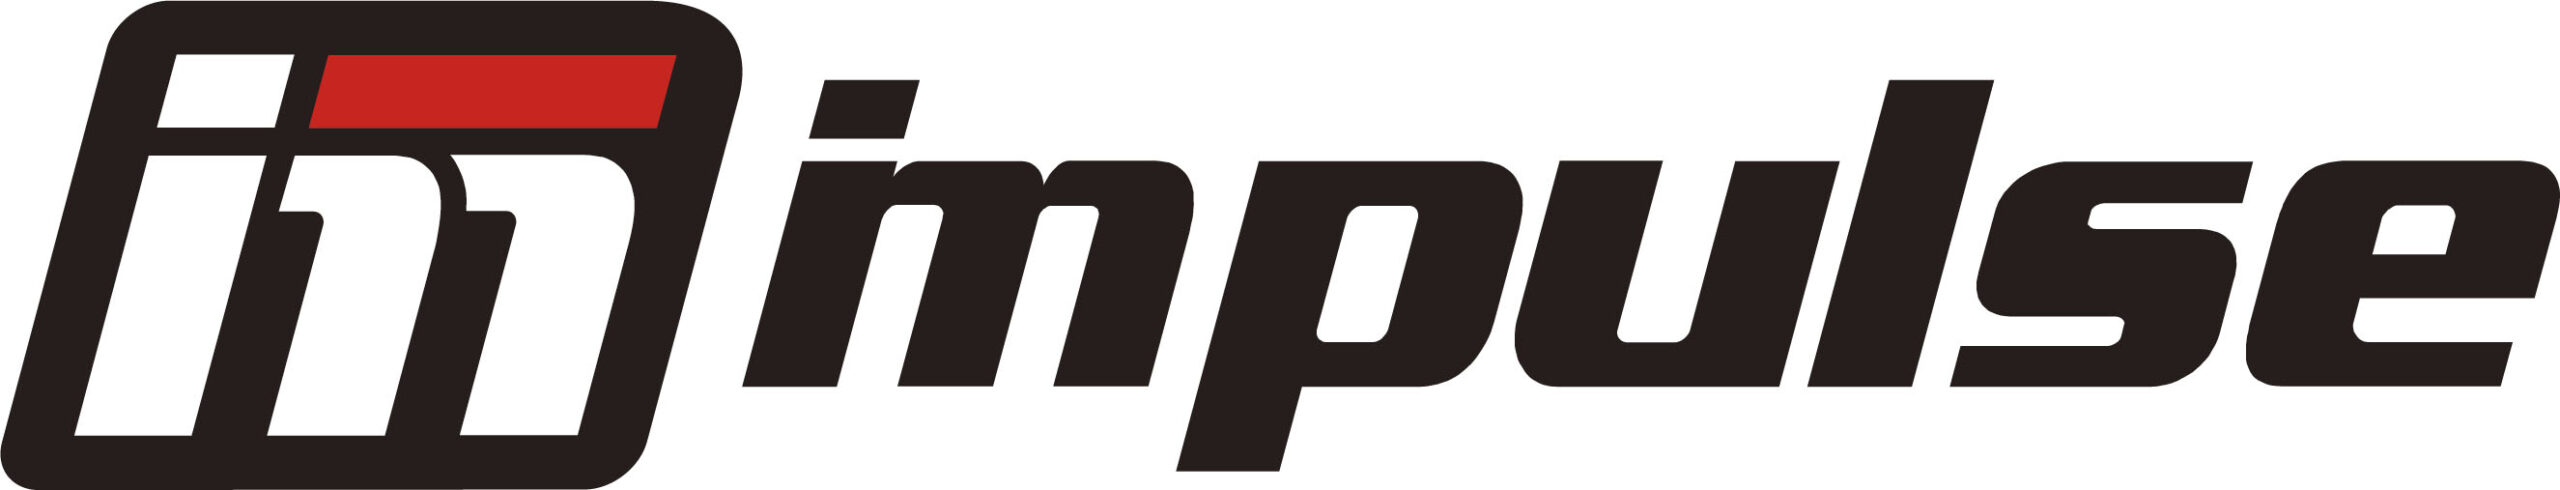 Impulse Fitness logo